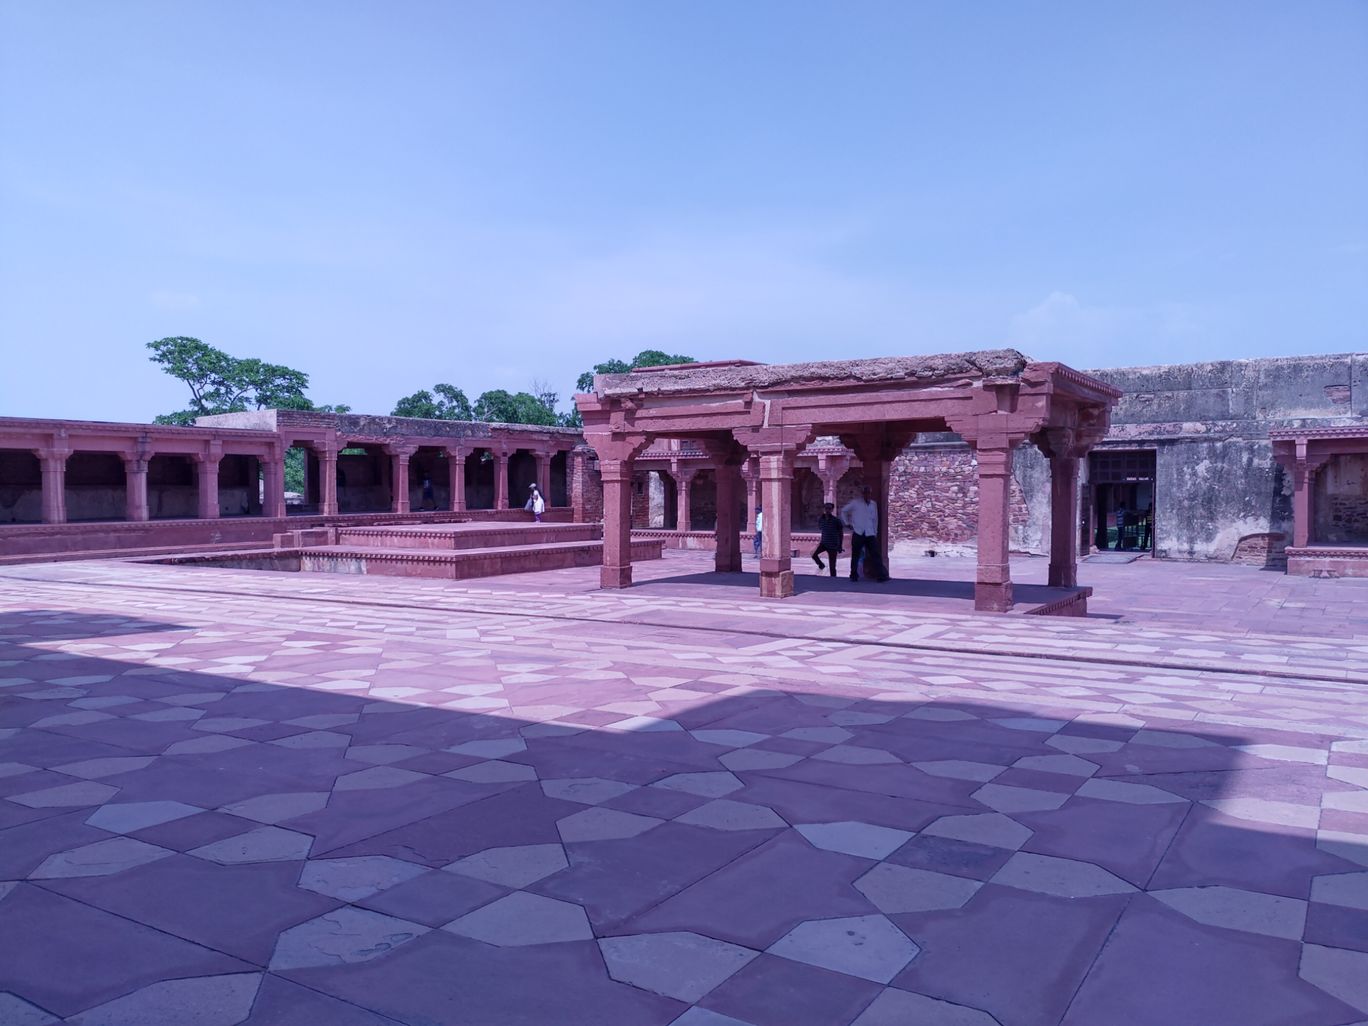 Photo of Jodha Bai's Palace By Azeem Muhammad